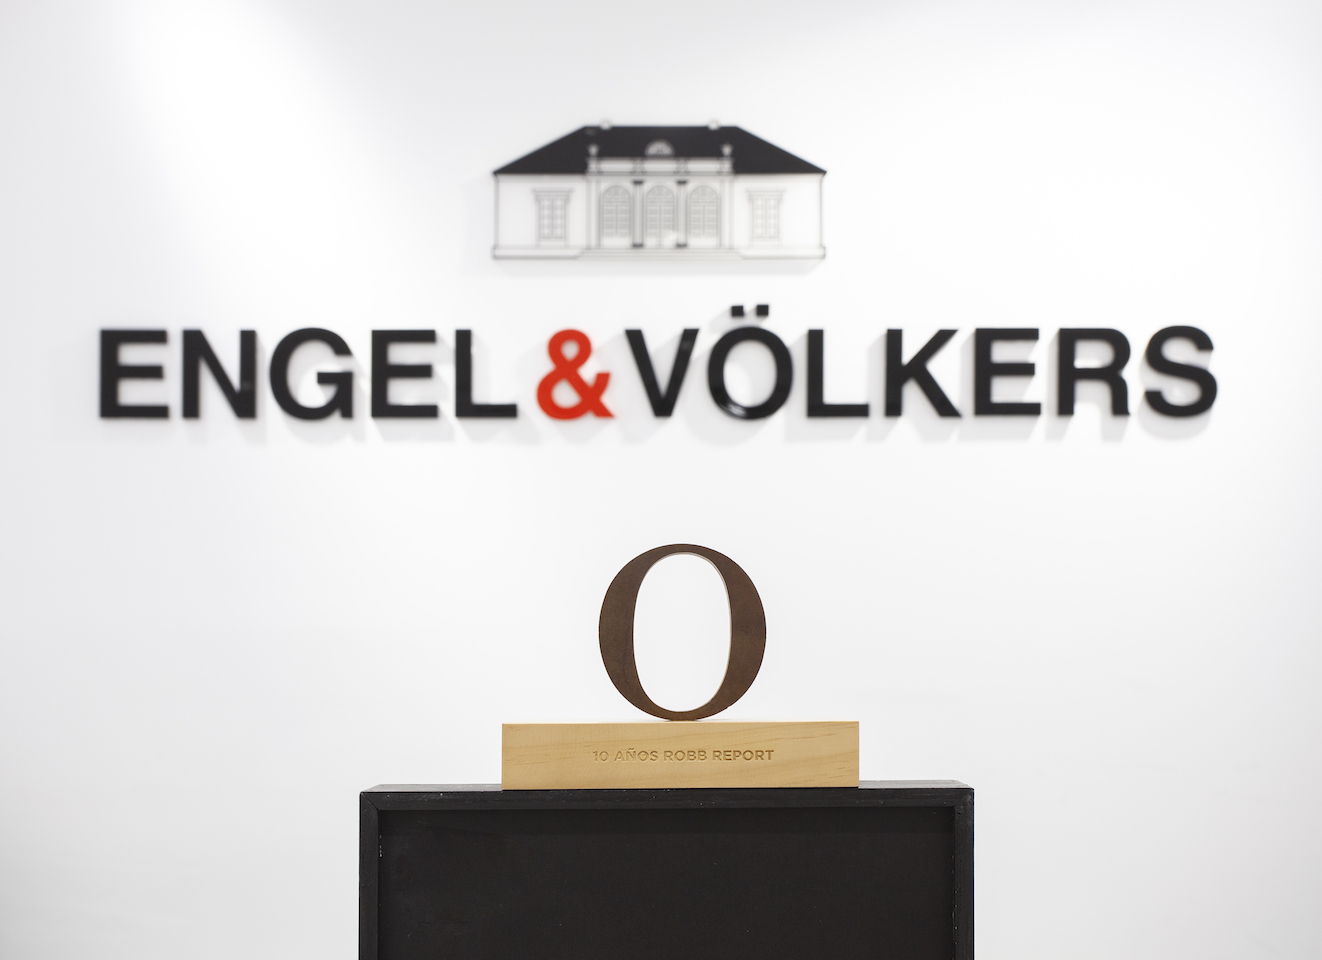 ‘Robb Report’ Spain once again rates Engel & Völkers as the top brand